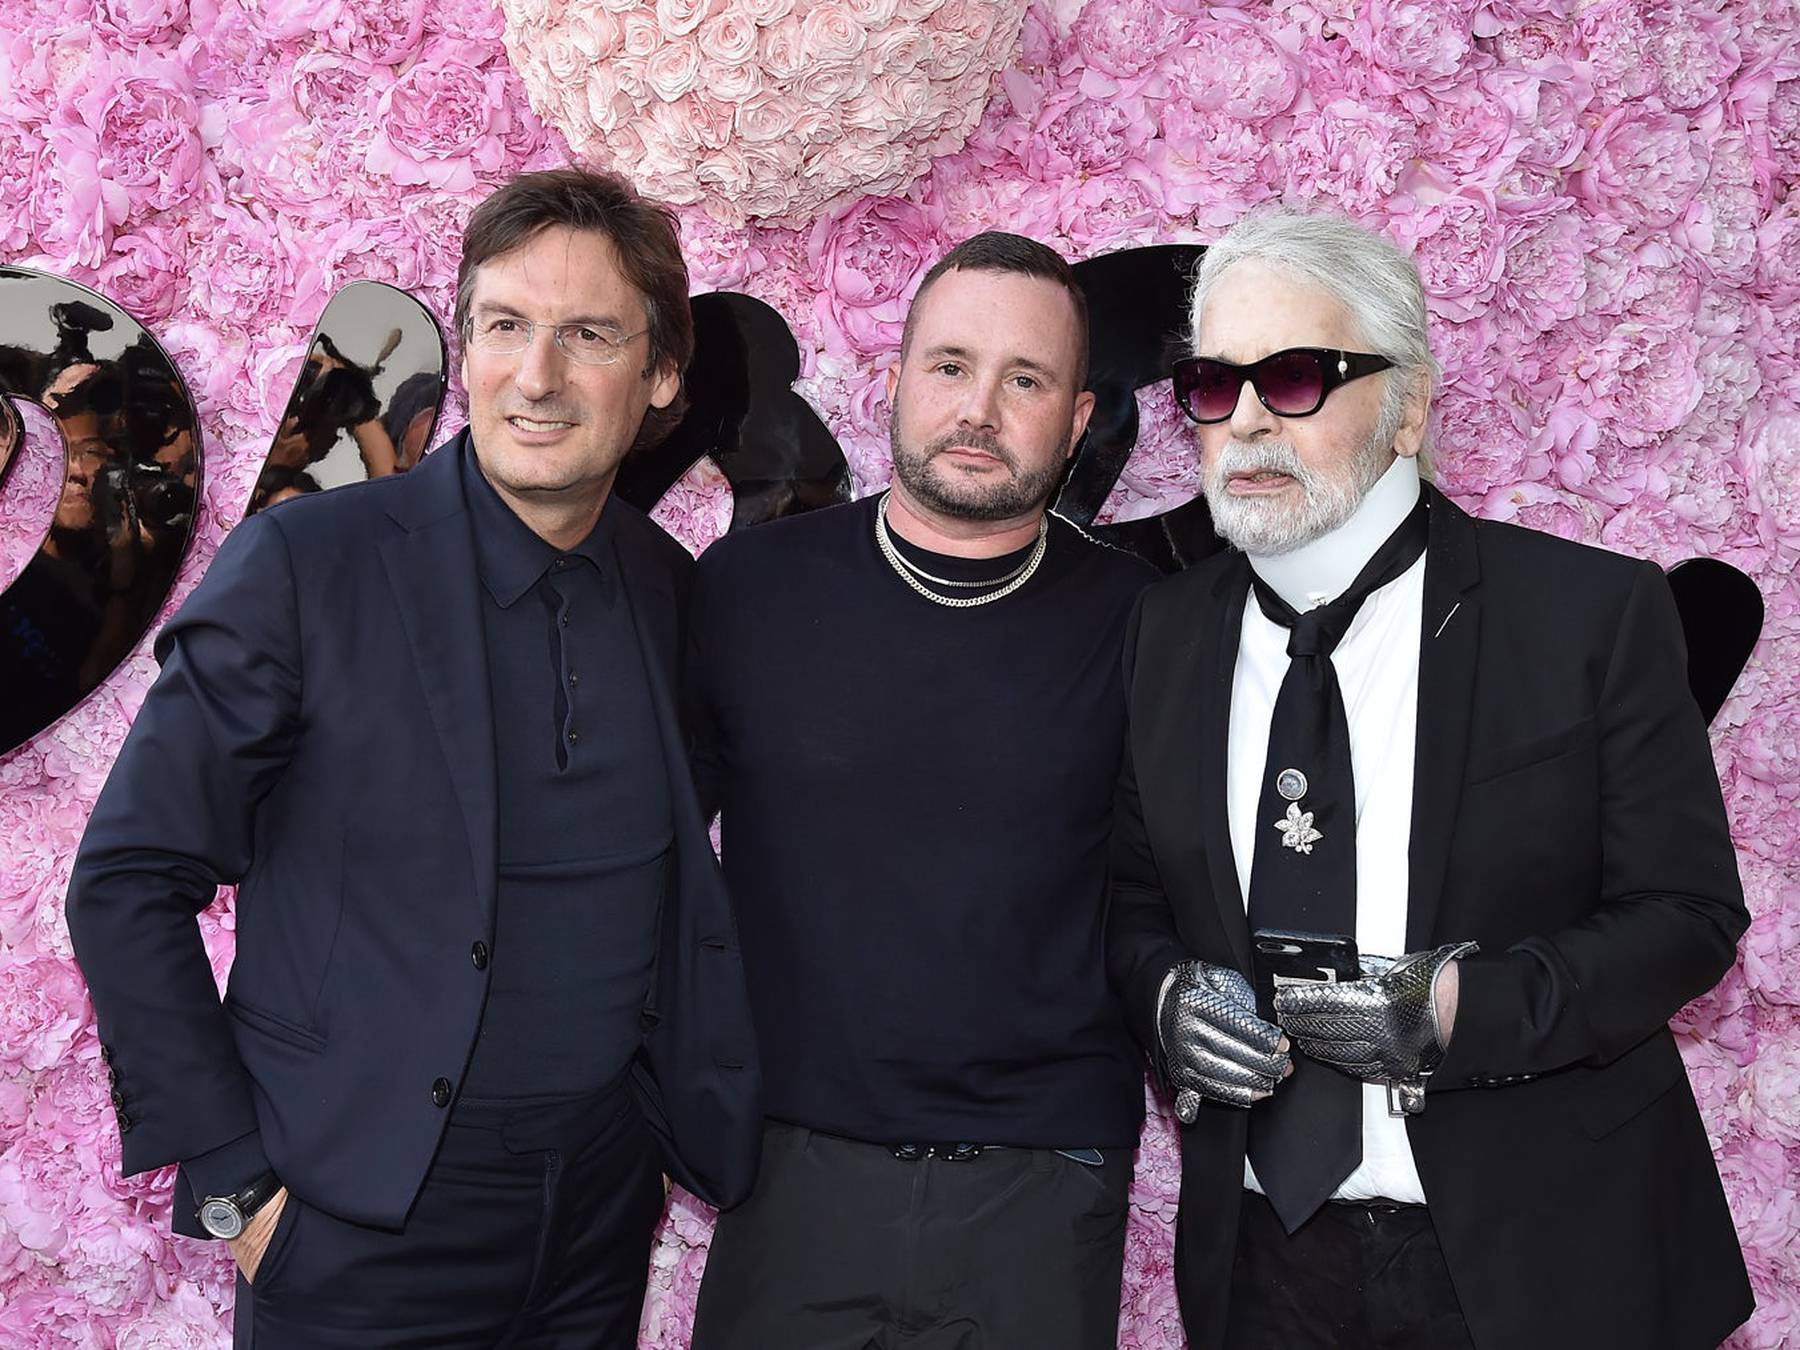 Kim Jones to succeed Karl Lagerfeld as creative director at Fendi